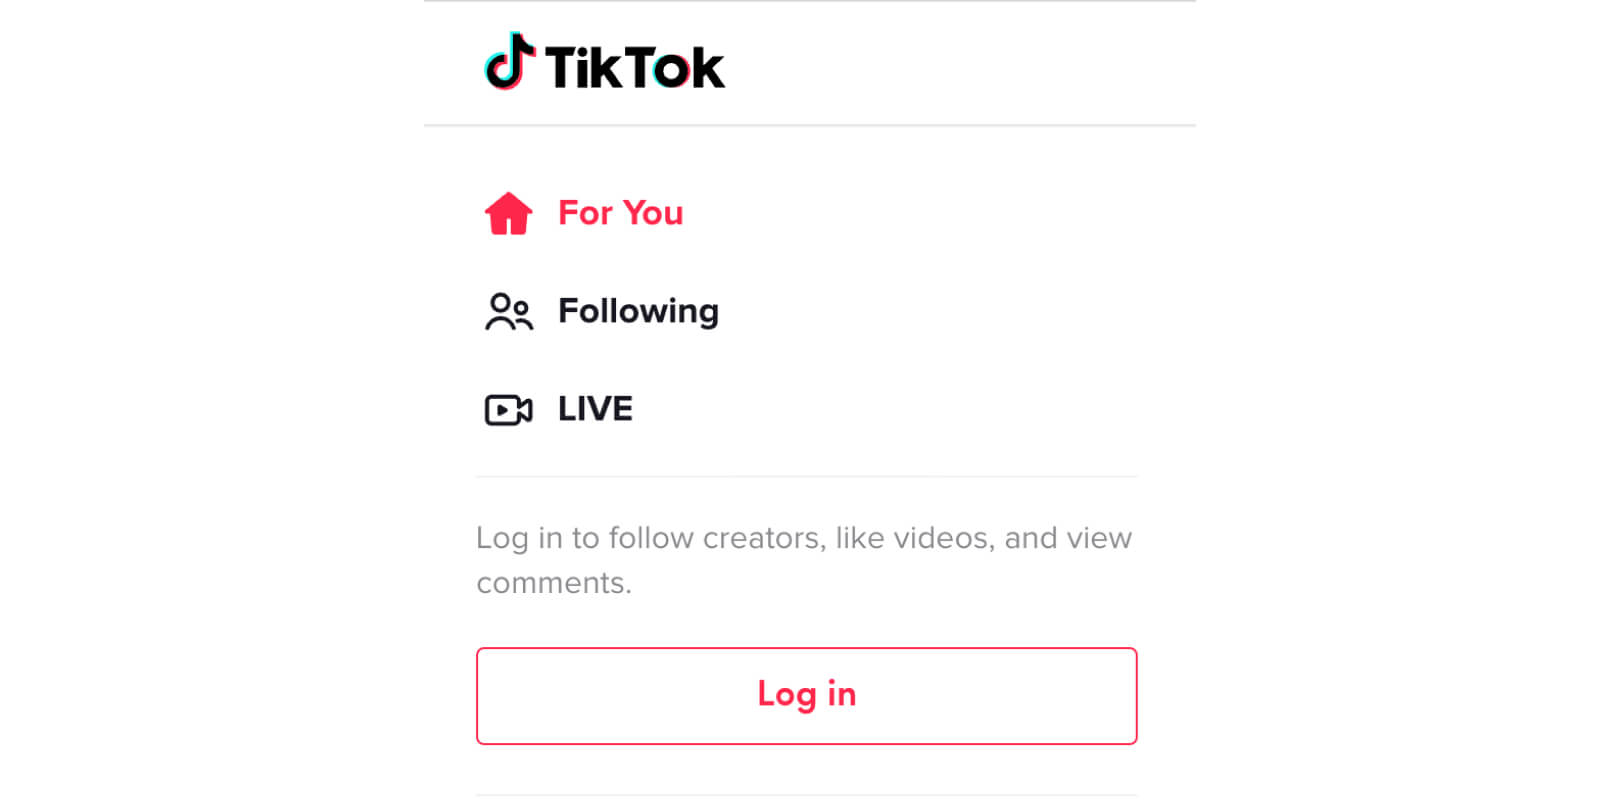 The New TikTok Promote Features